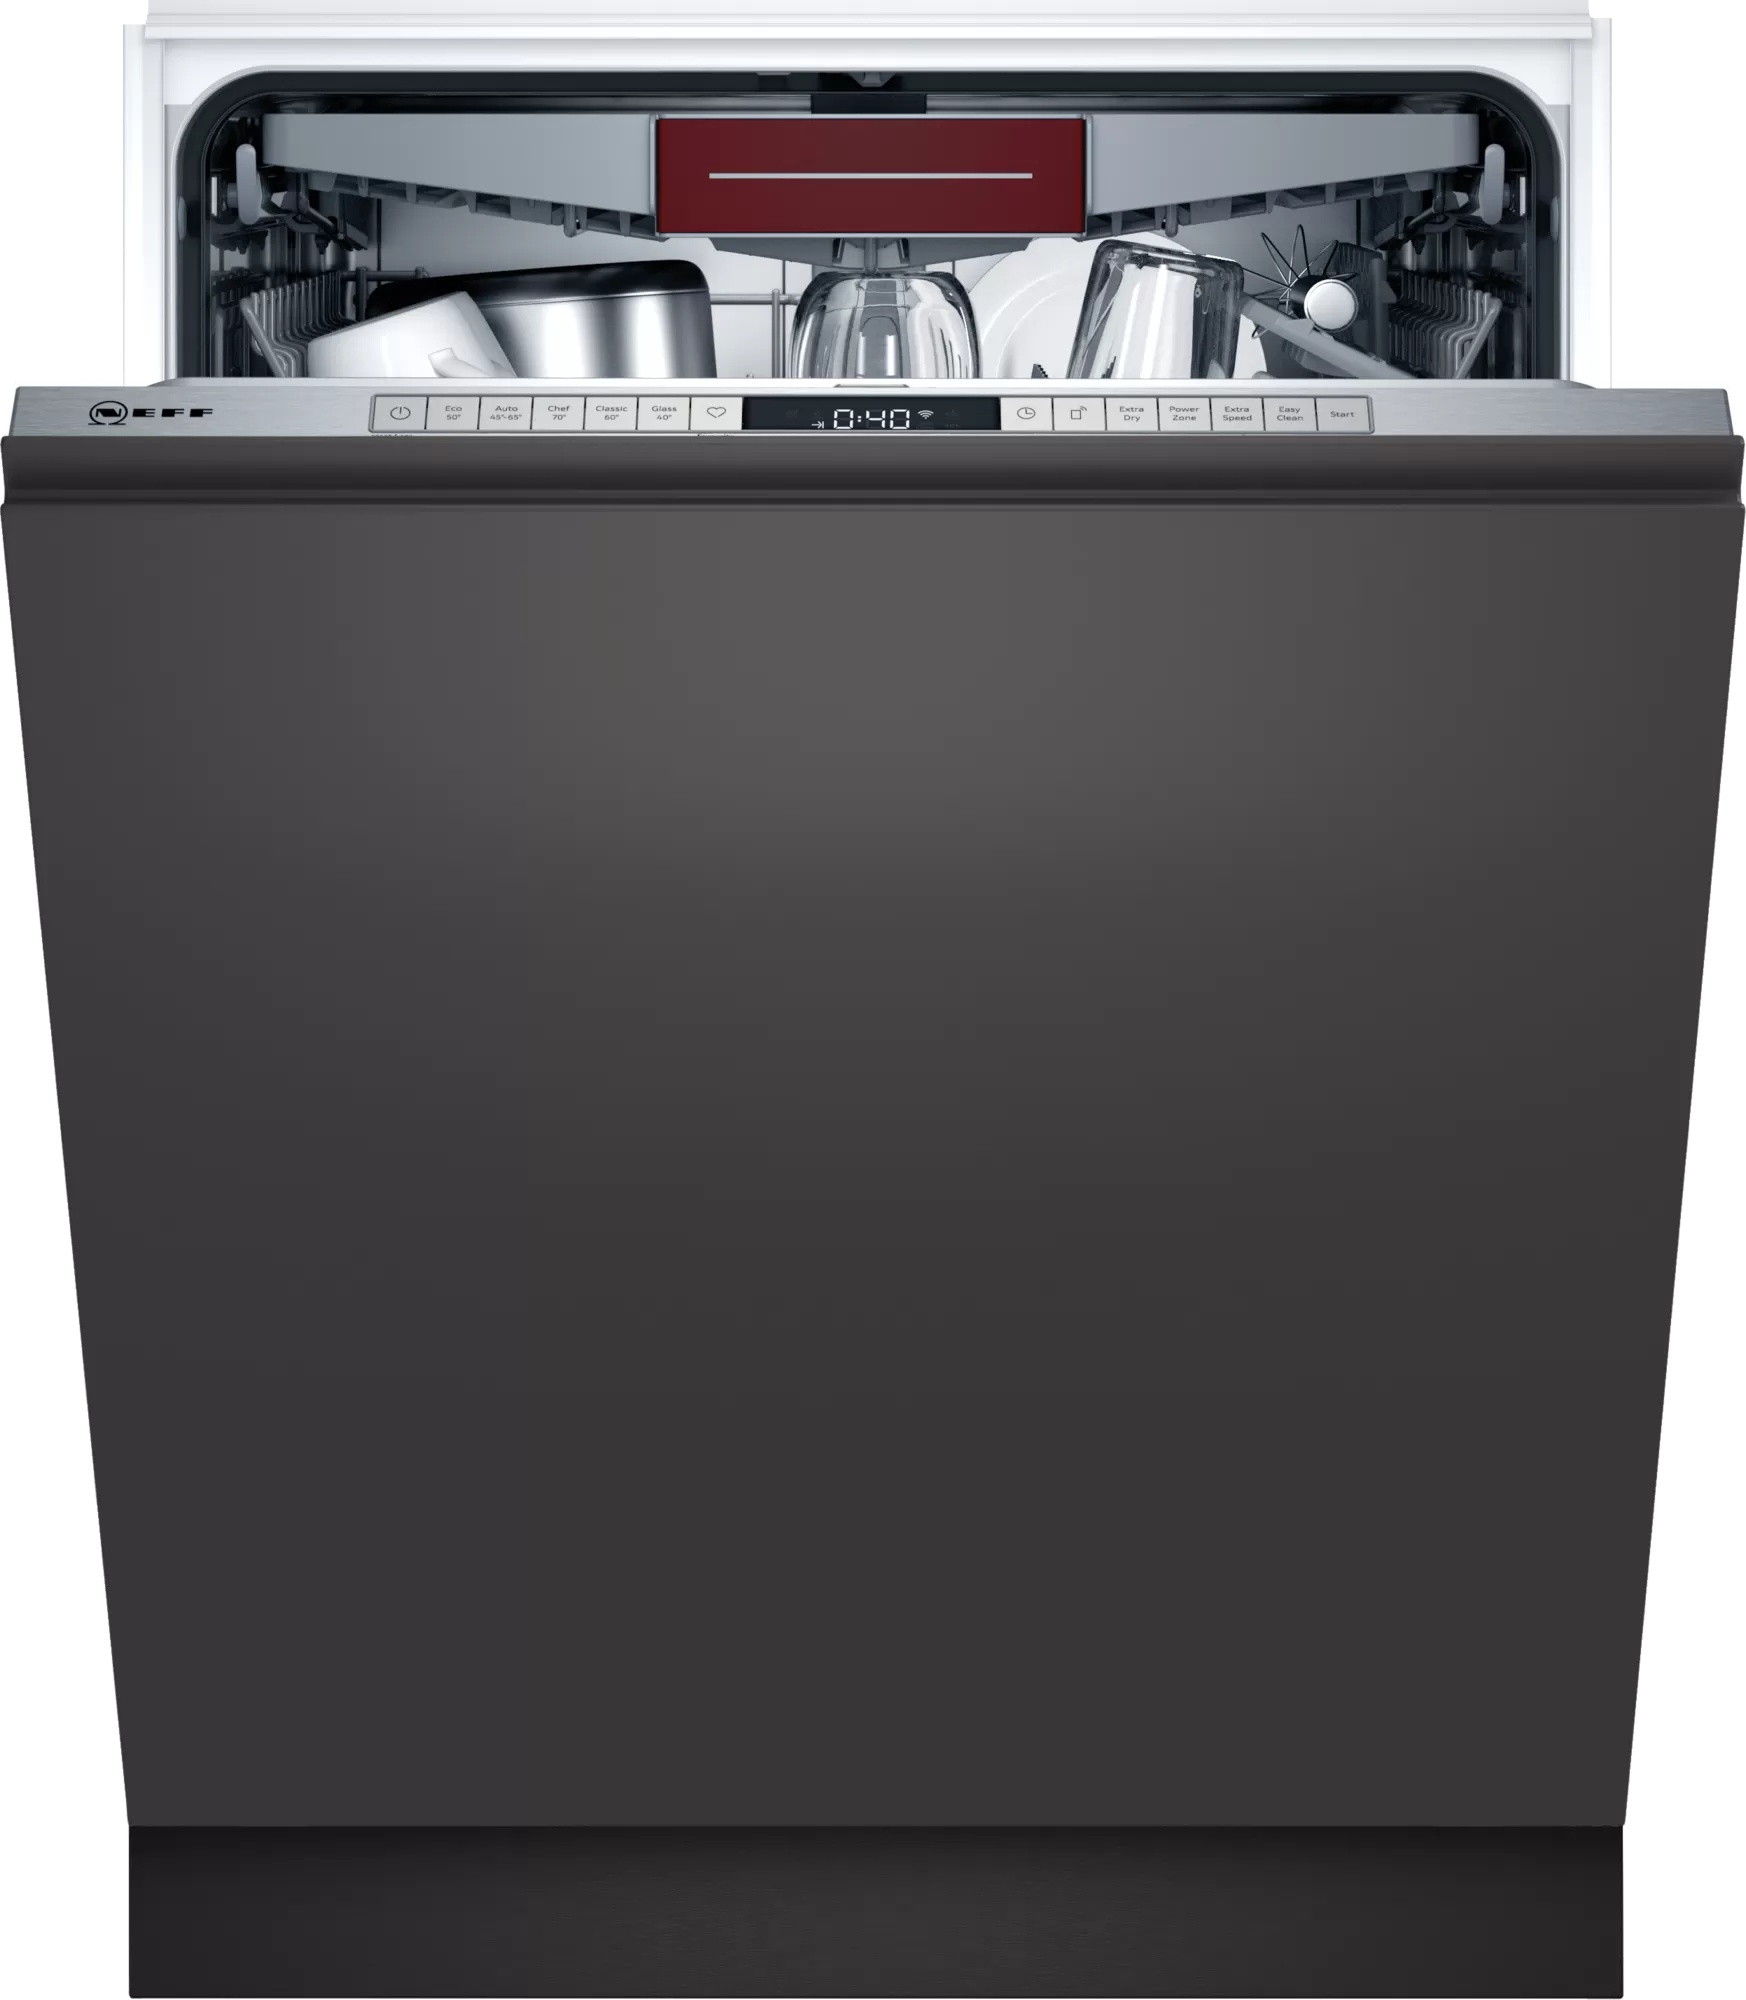 Masina de spalat vase incorporabila Neff N 50 14 seturi 6 programe 60cm Home Connect clasa D 60cm imagine reduss.ro 2022